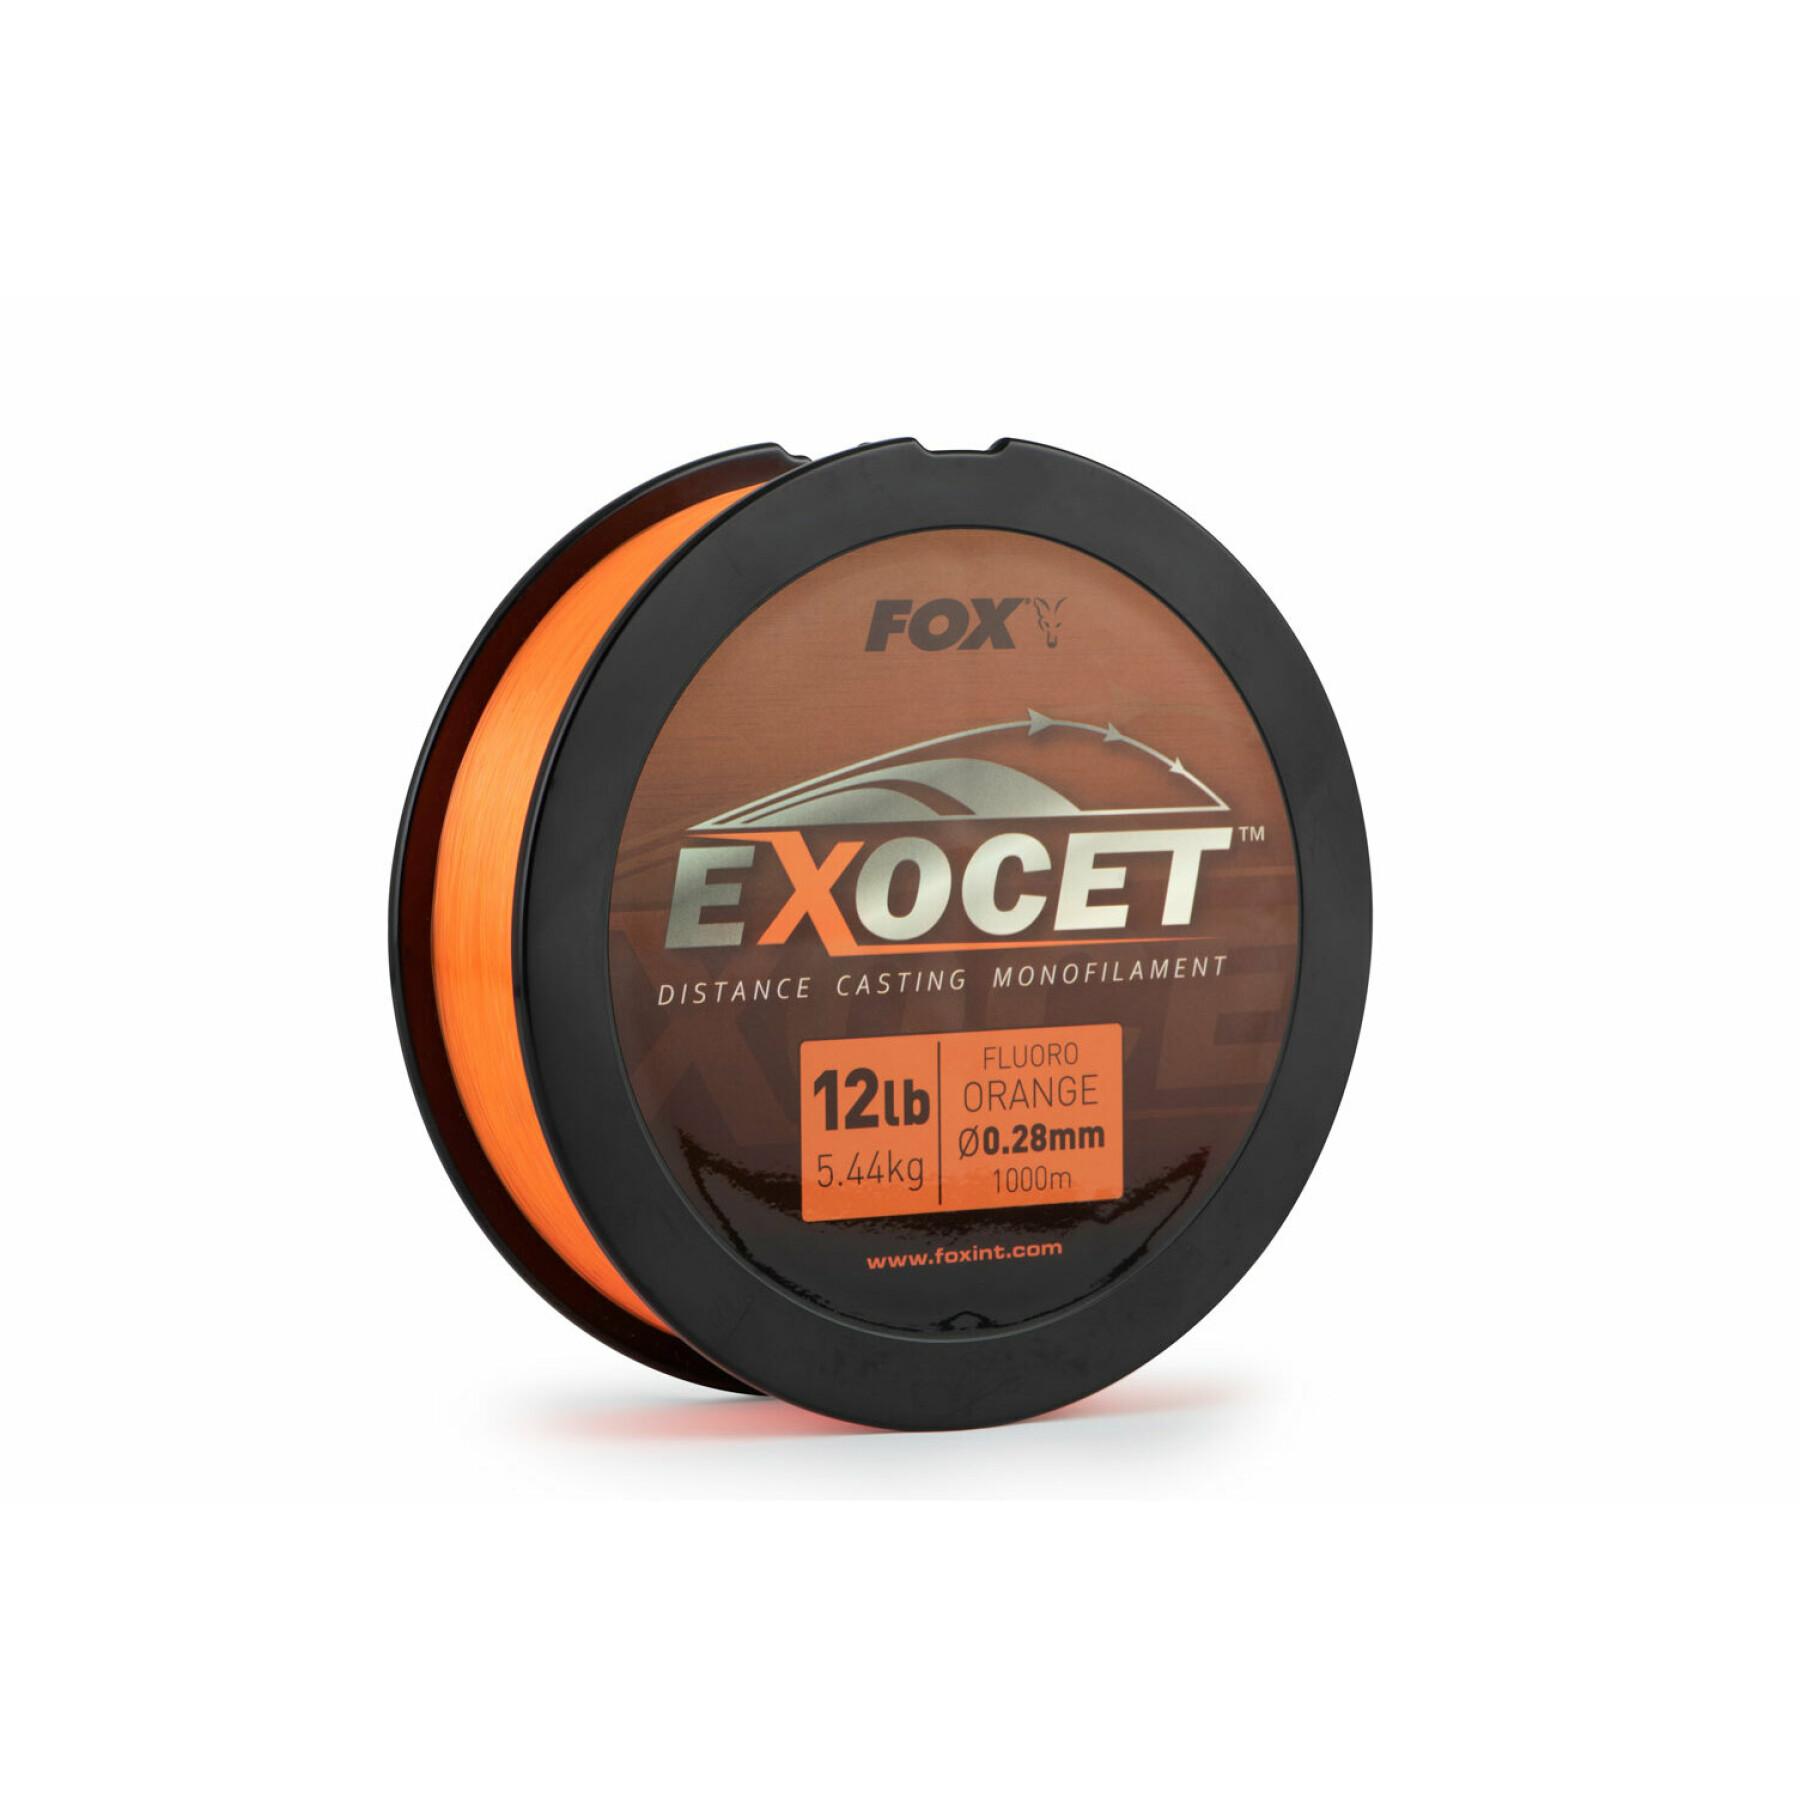 Linia Exocet Fox mono